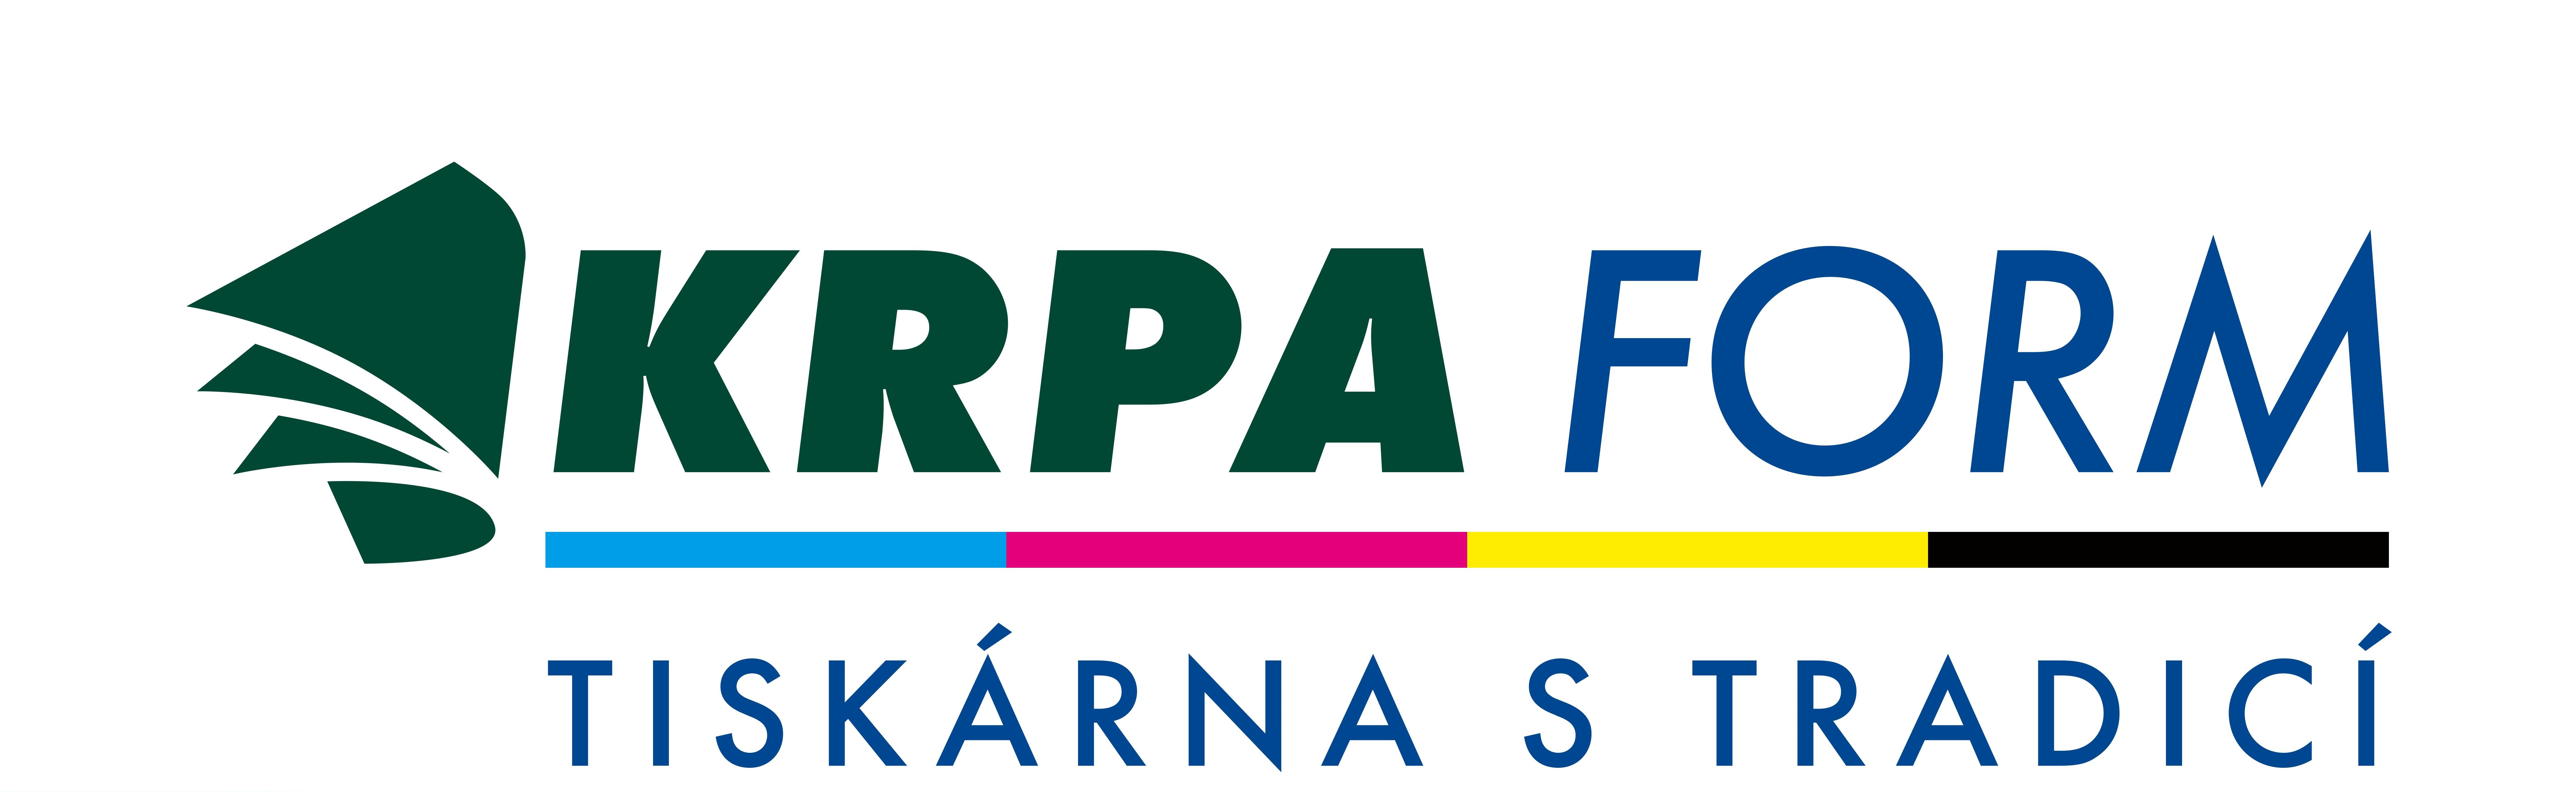 KRPA Form